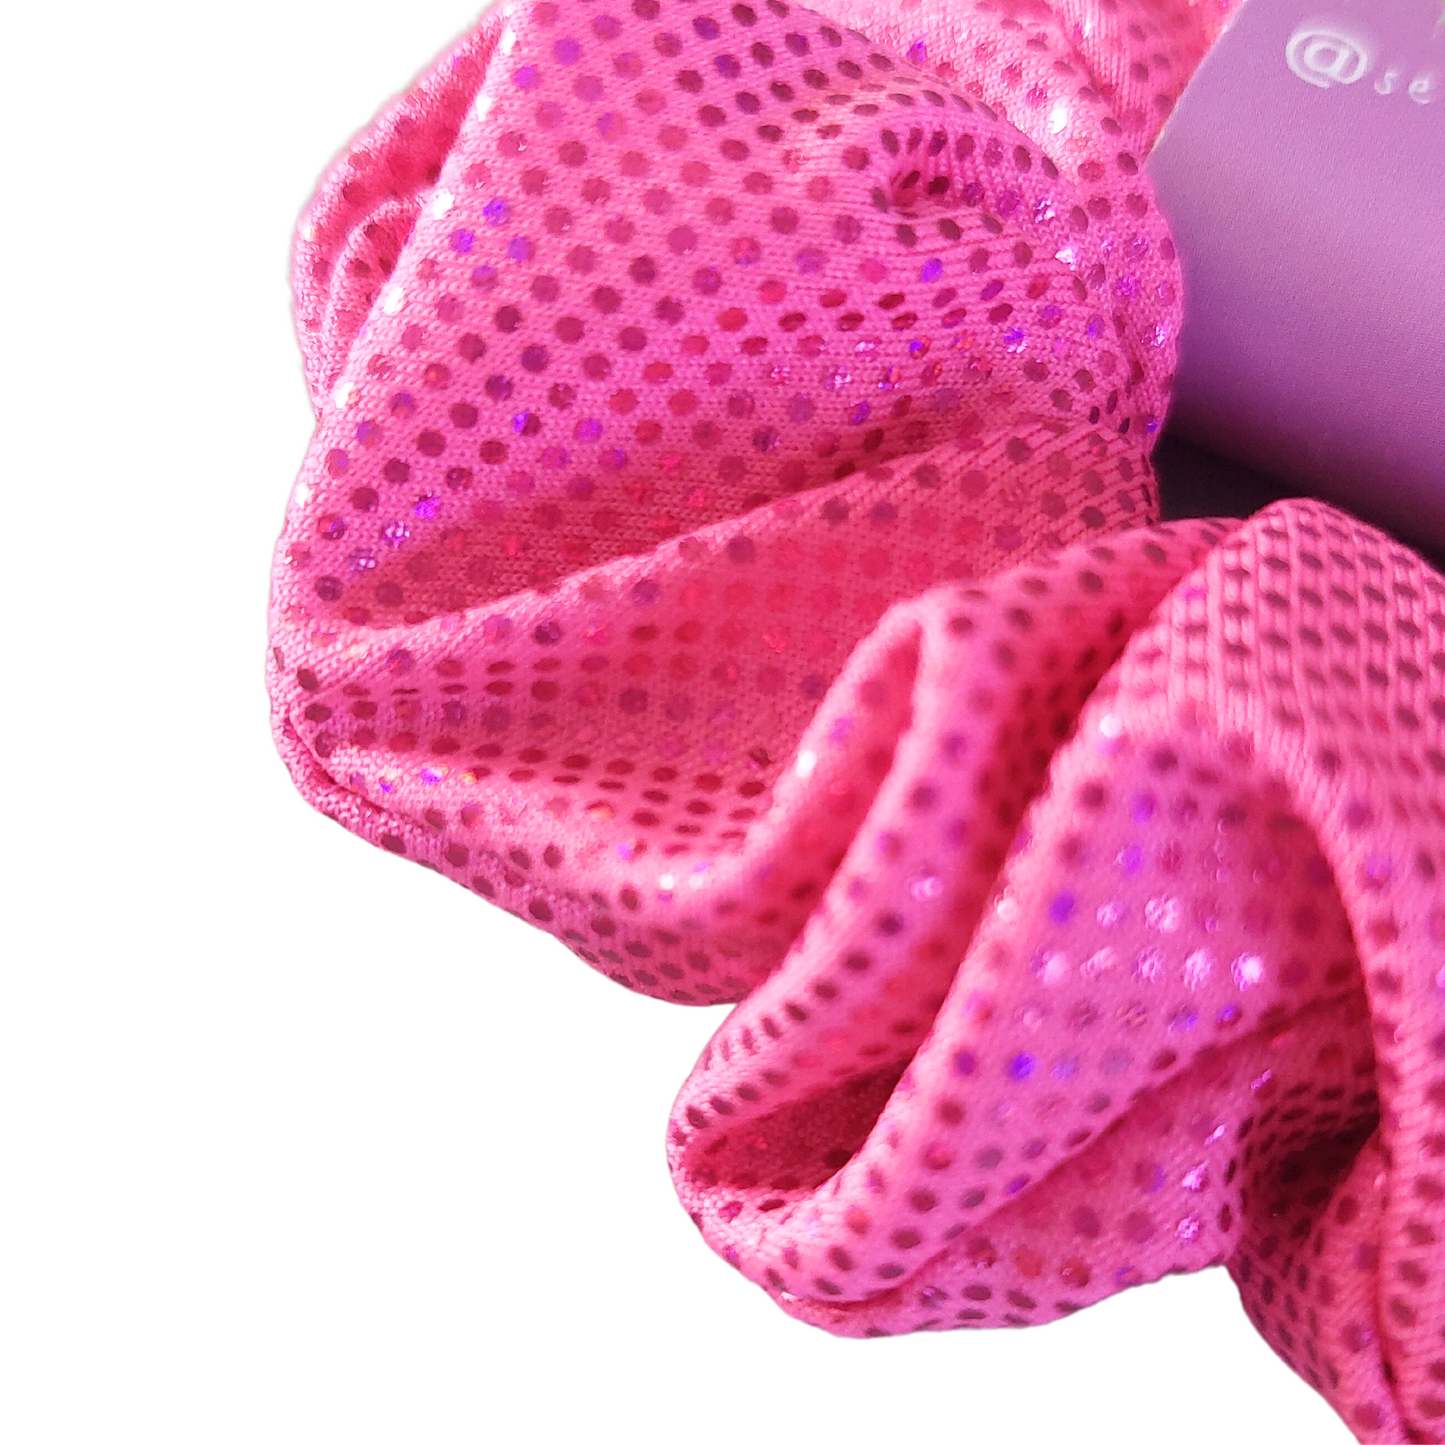 Mini scrunchie pink shimmer